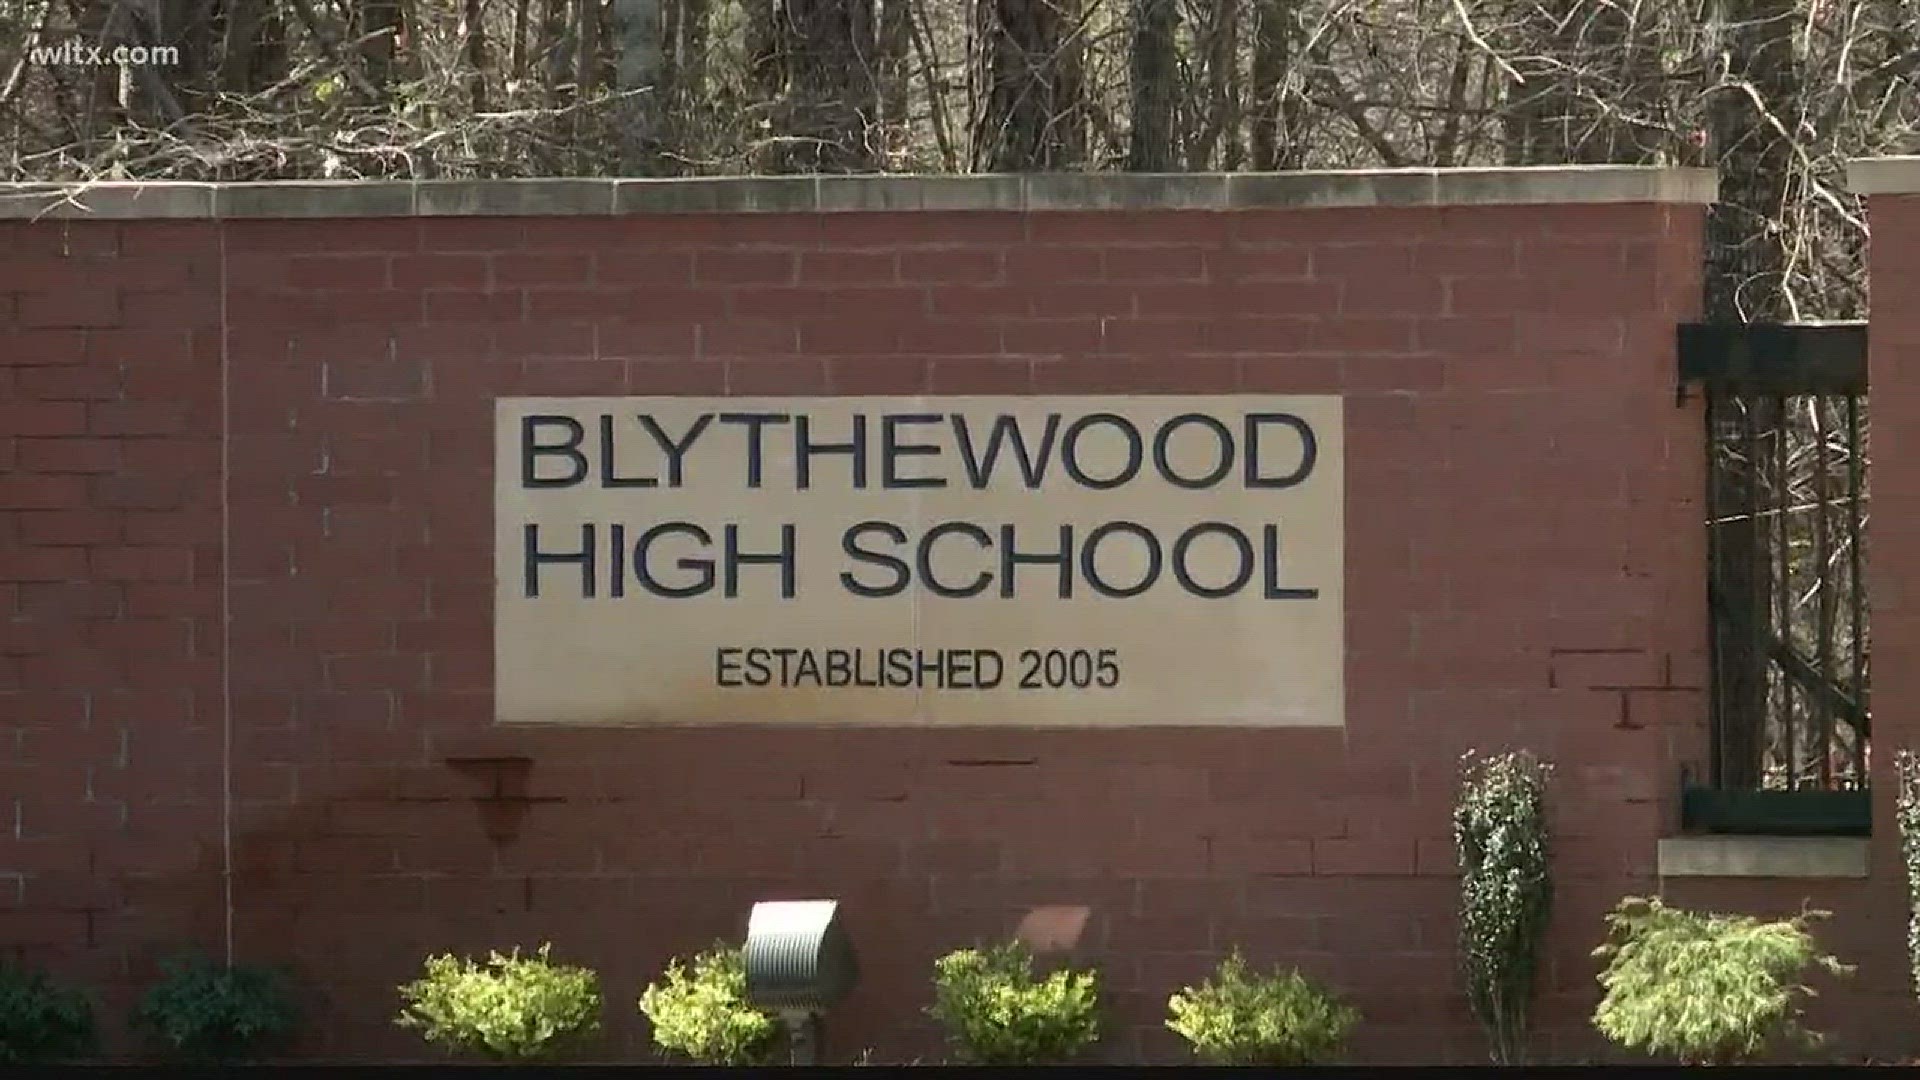 Tonight Richland school district 2 says a gun was found at Blythewood High School.